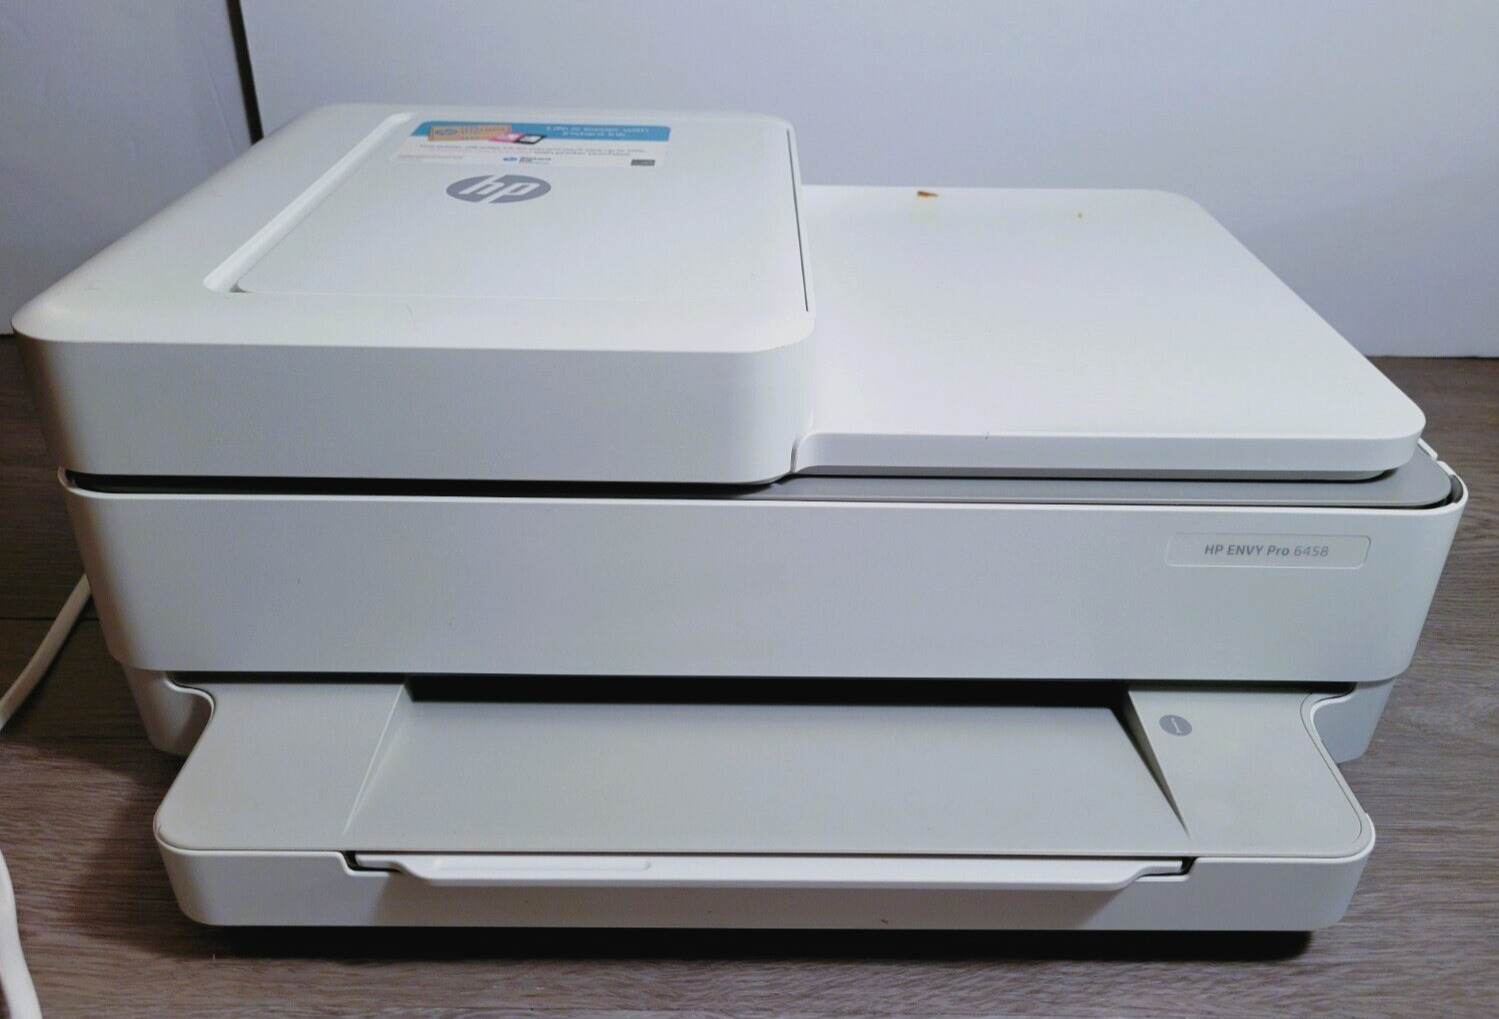 HP Envy Pro 6458 All-in-One Color Inkjet Printer